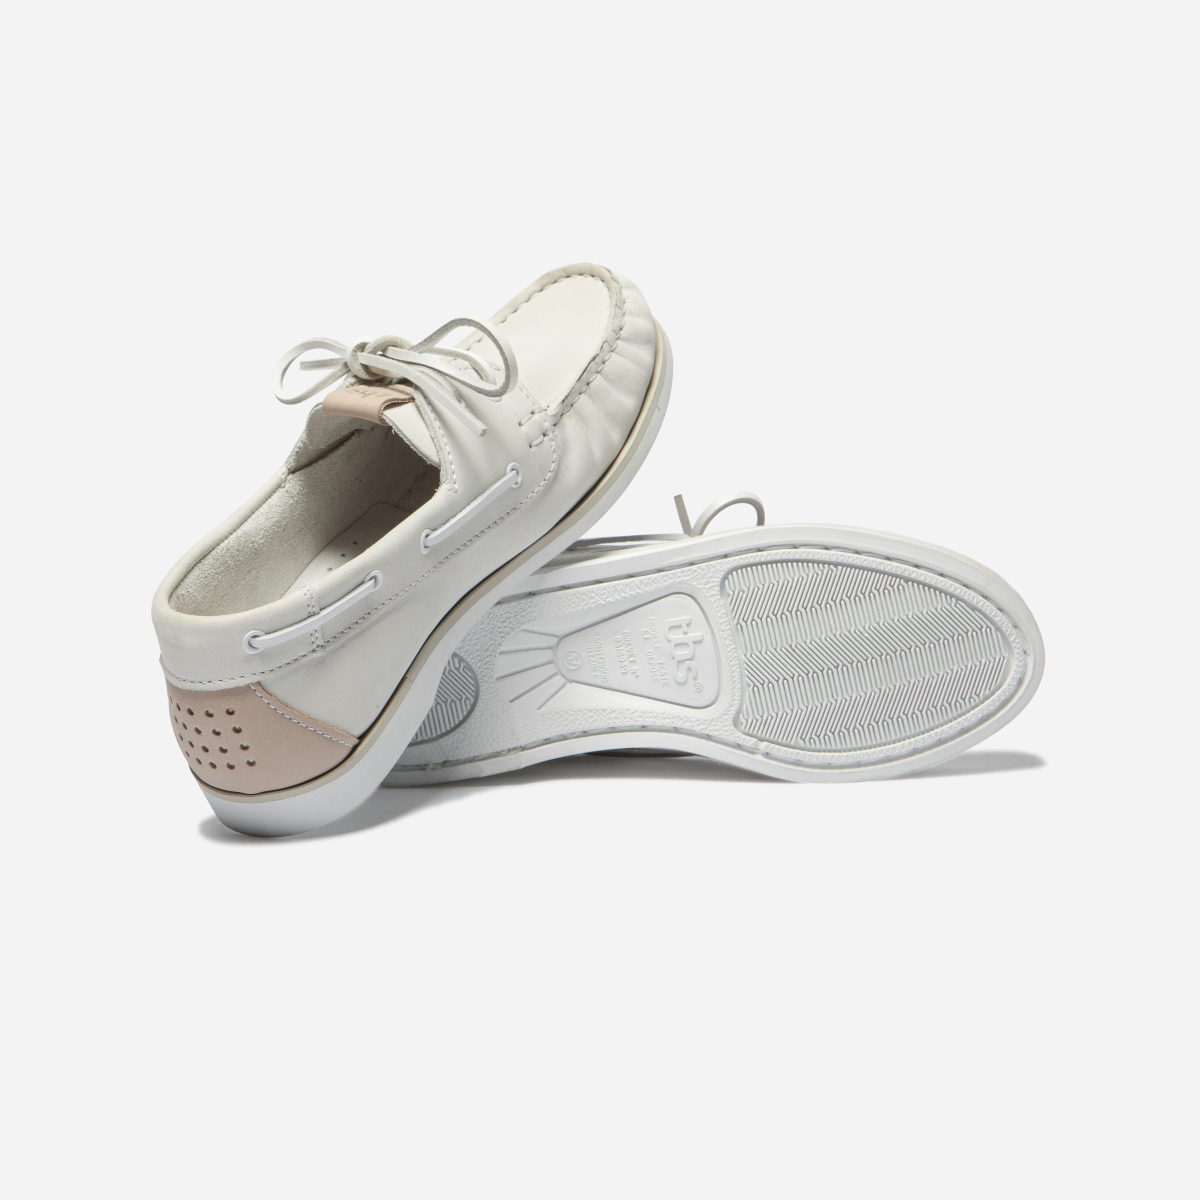 TBS Palmela chaussure bateau, femme - blanc crème, pointure 40